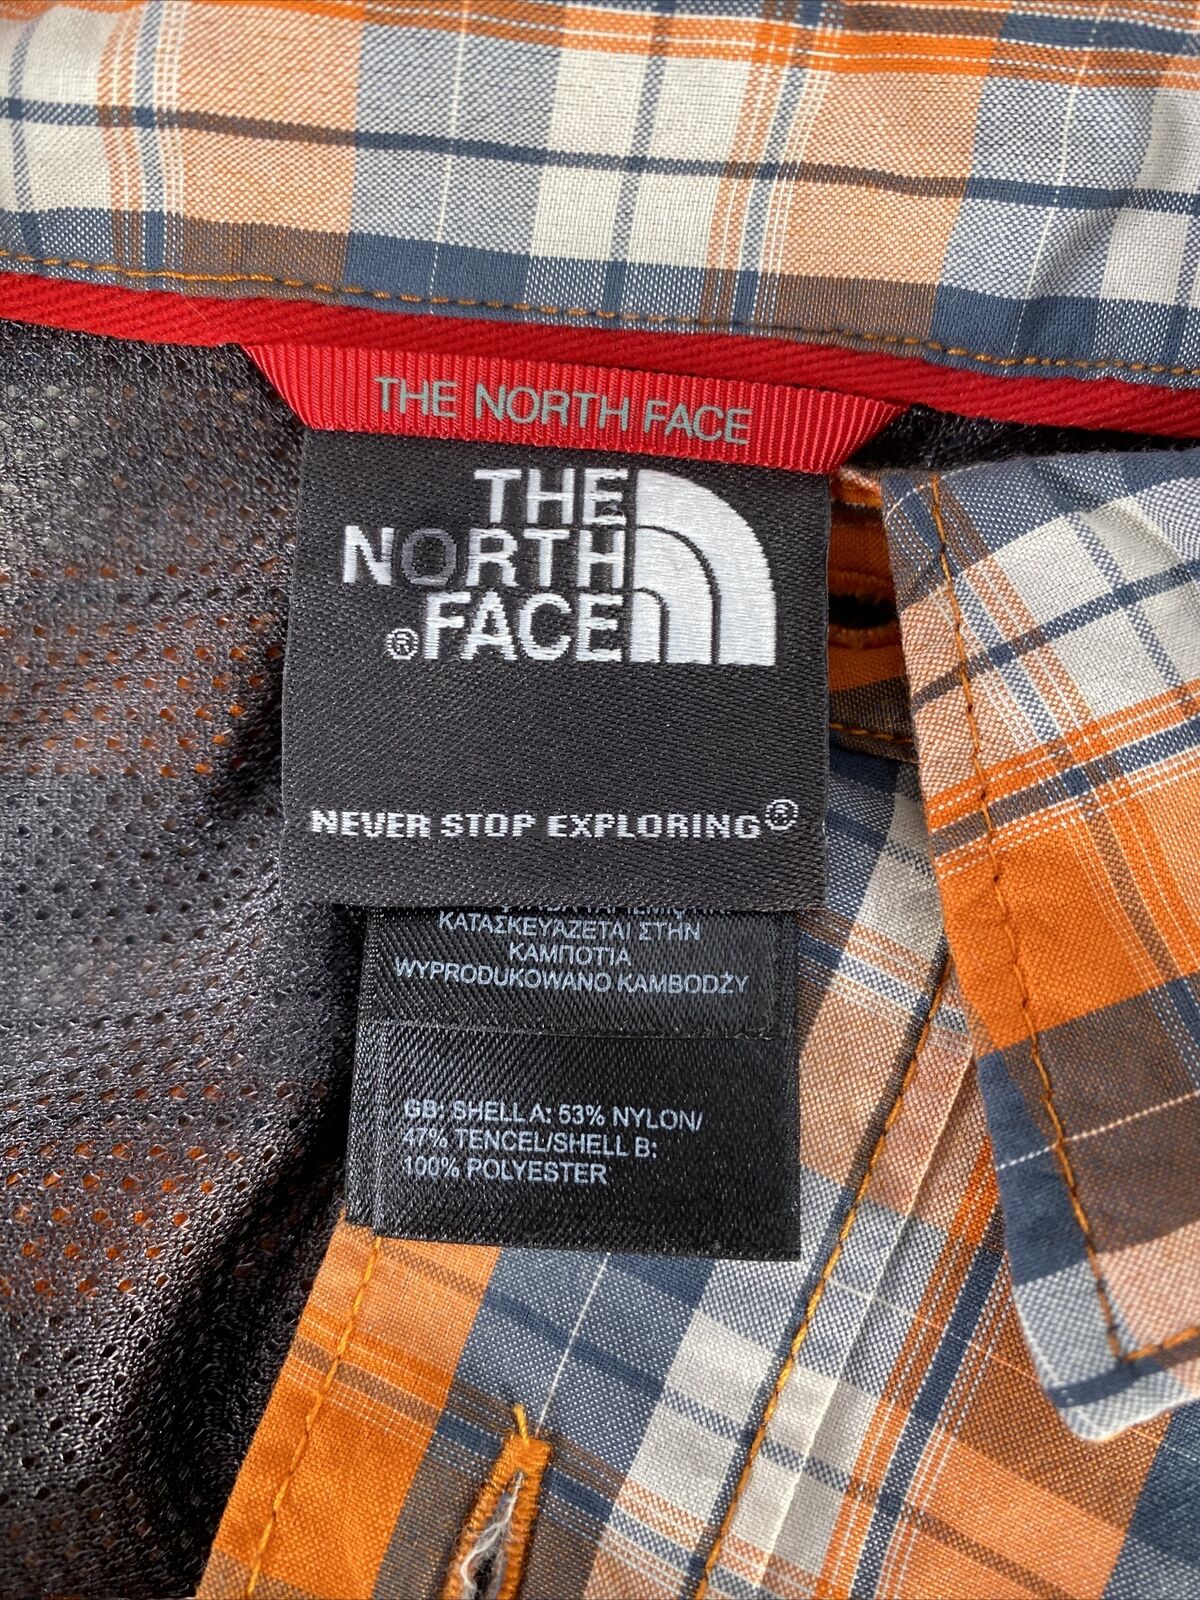 The North Face Camisa con botones de manga corta naranja/gris para hombre - M